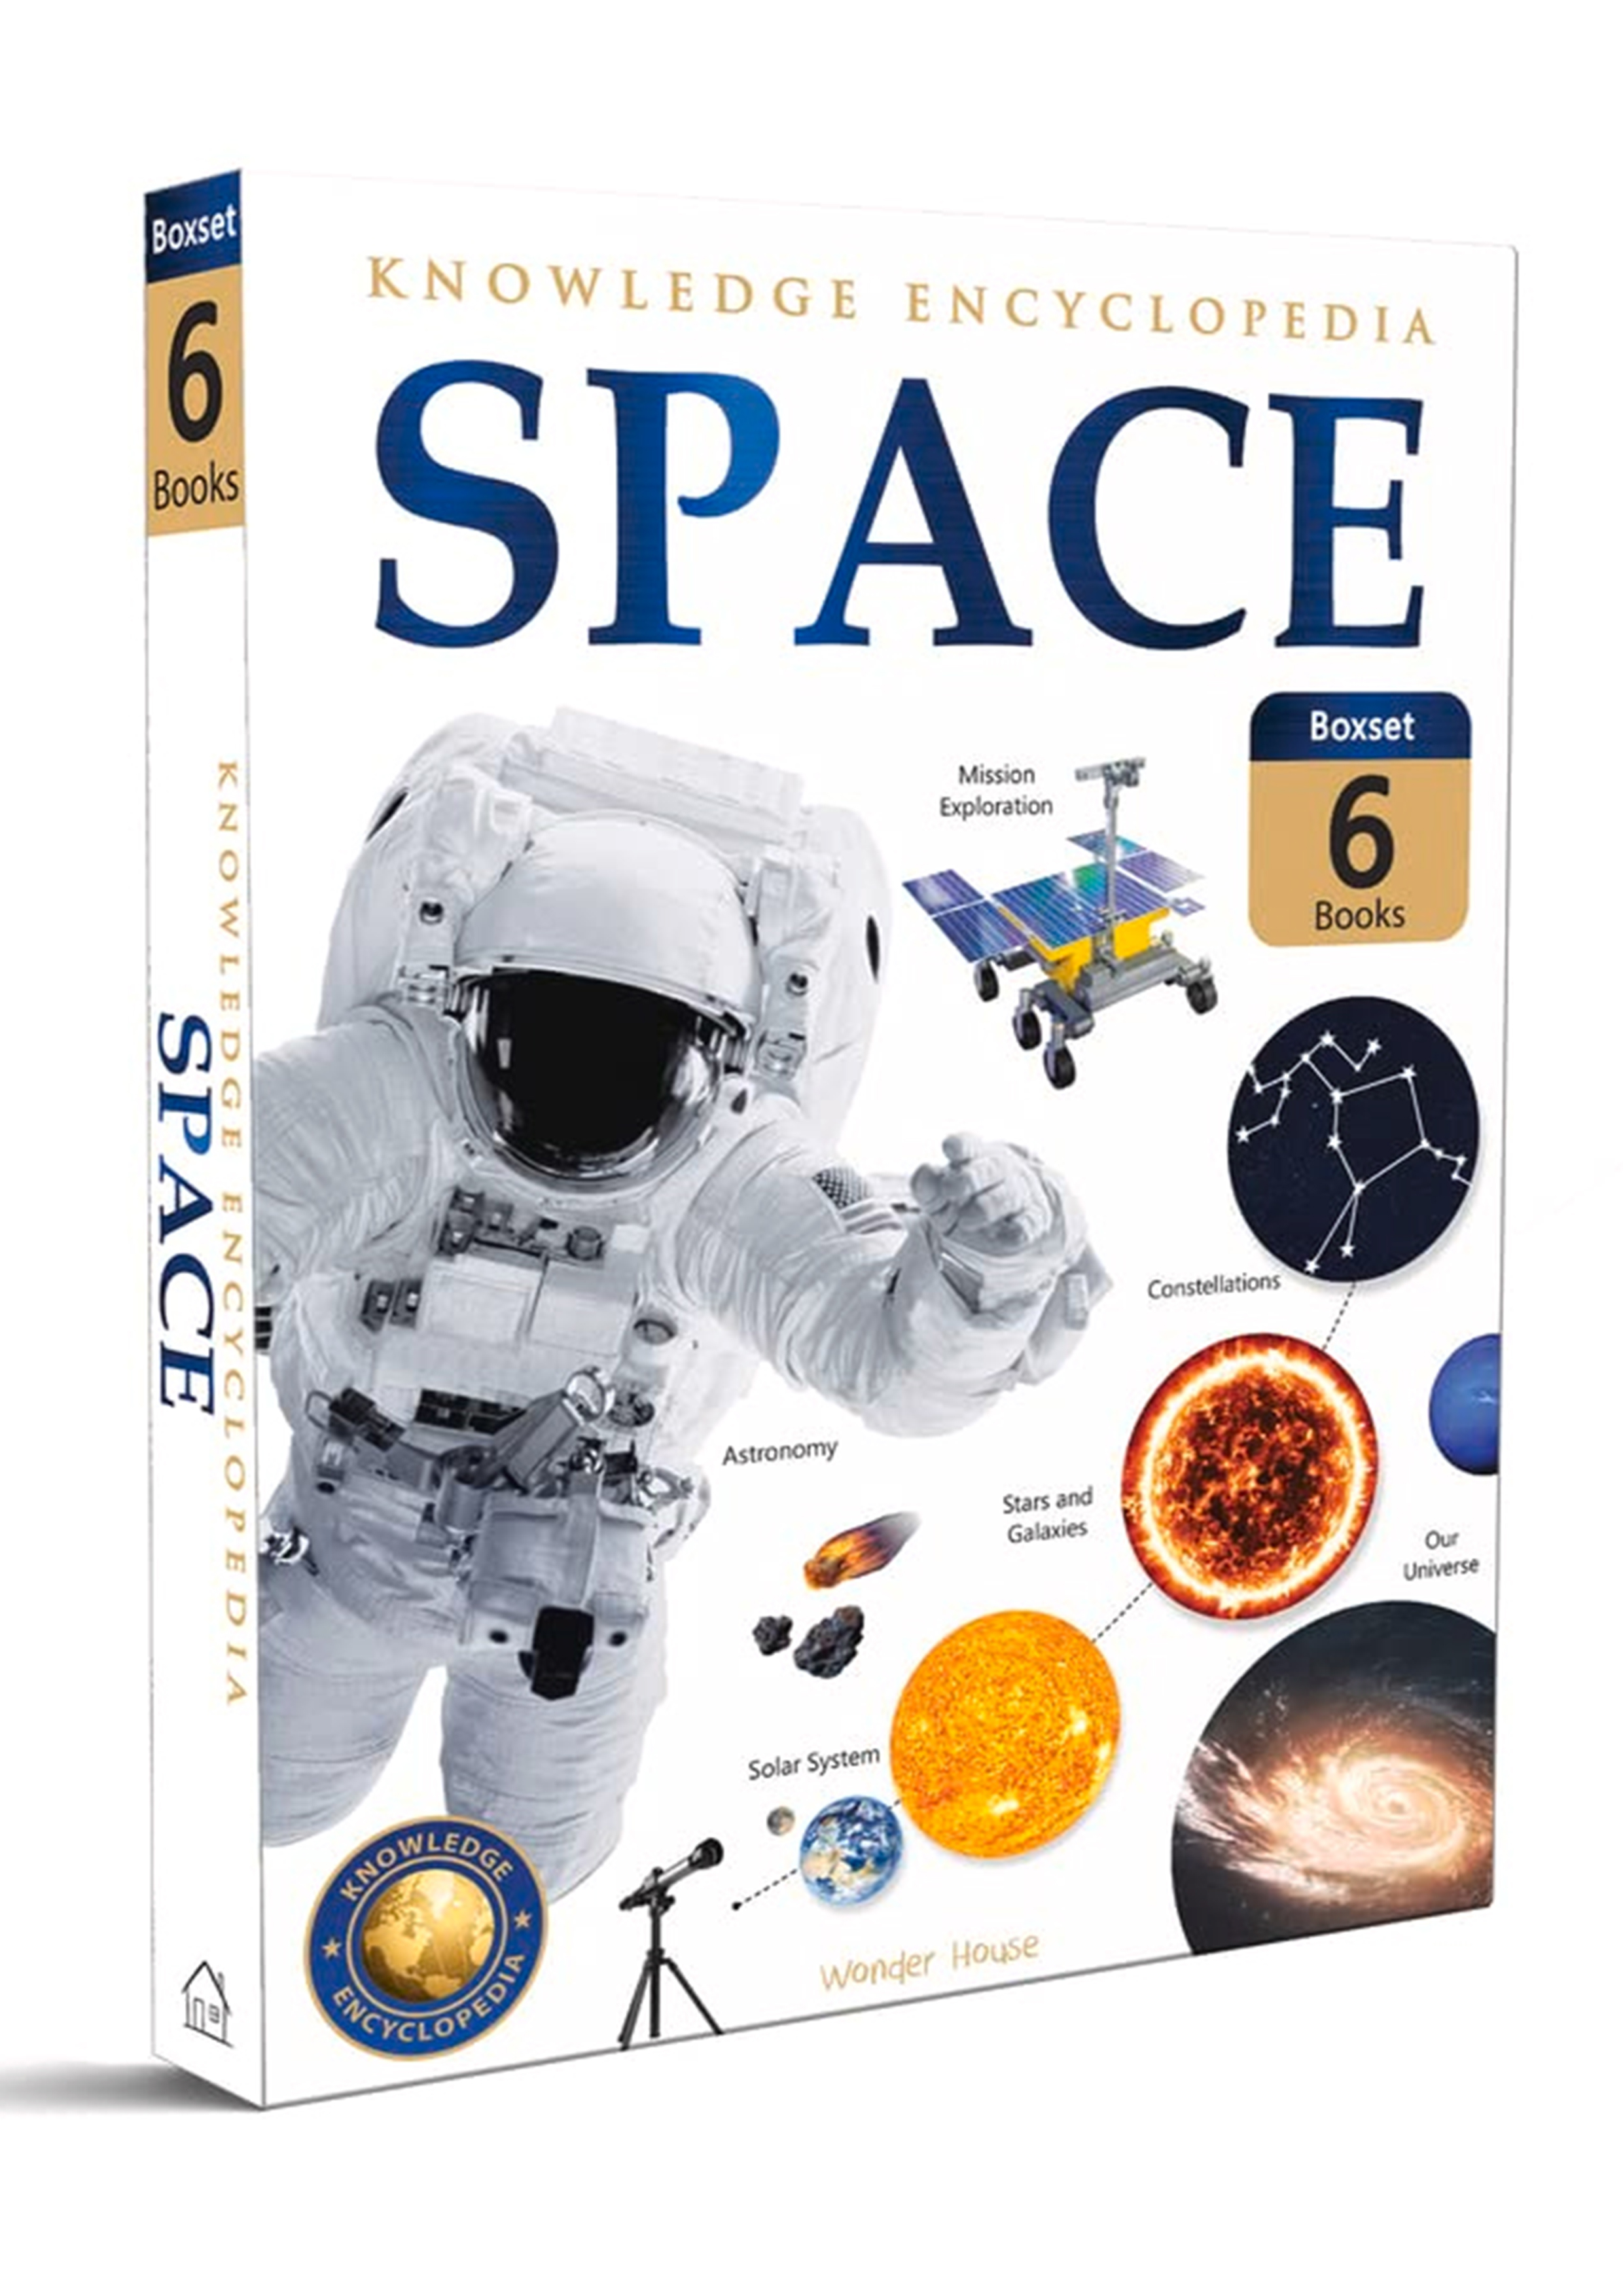 Knowledge Encyclopedia Space Boxset 6 Books (পেপারব্যাক)